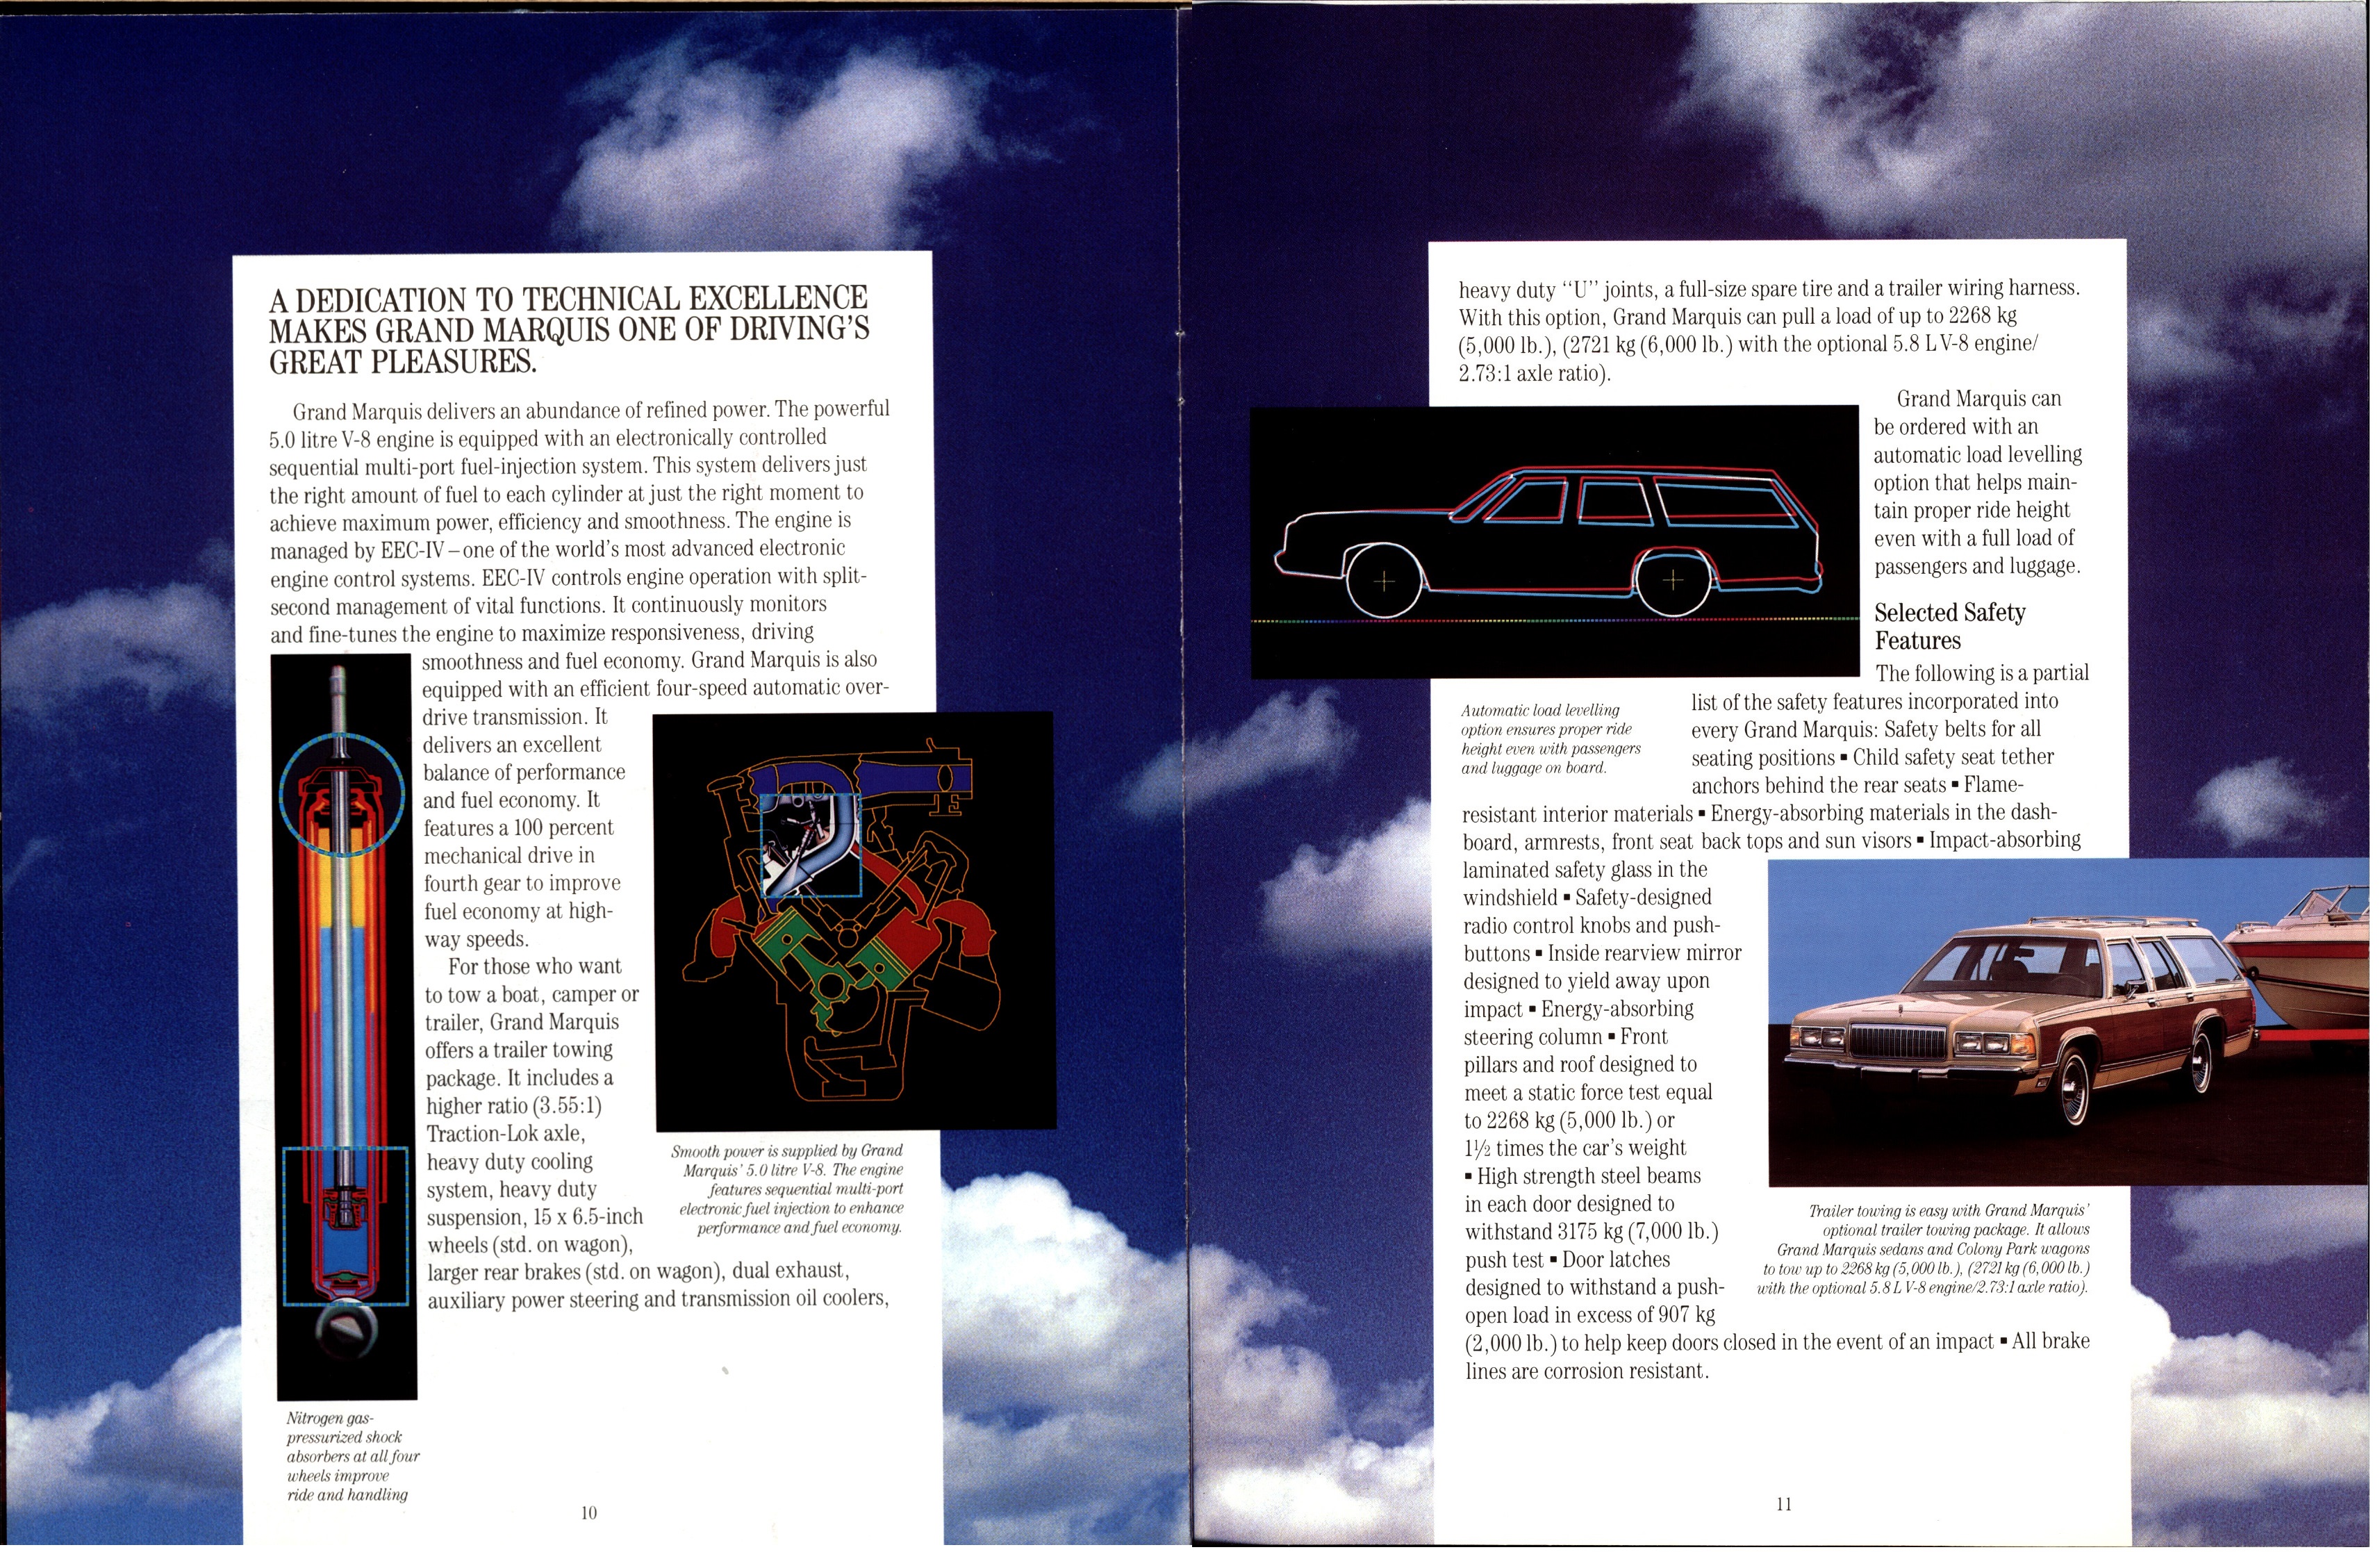 1989 Mercury Grand Marquis Brochure (Cdn) 10-11